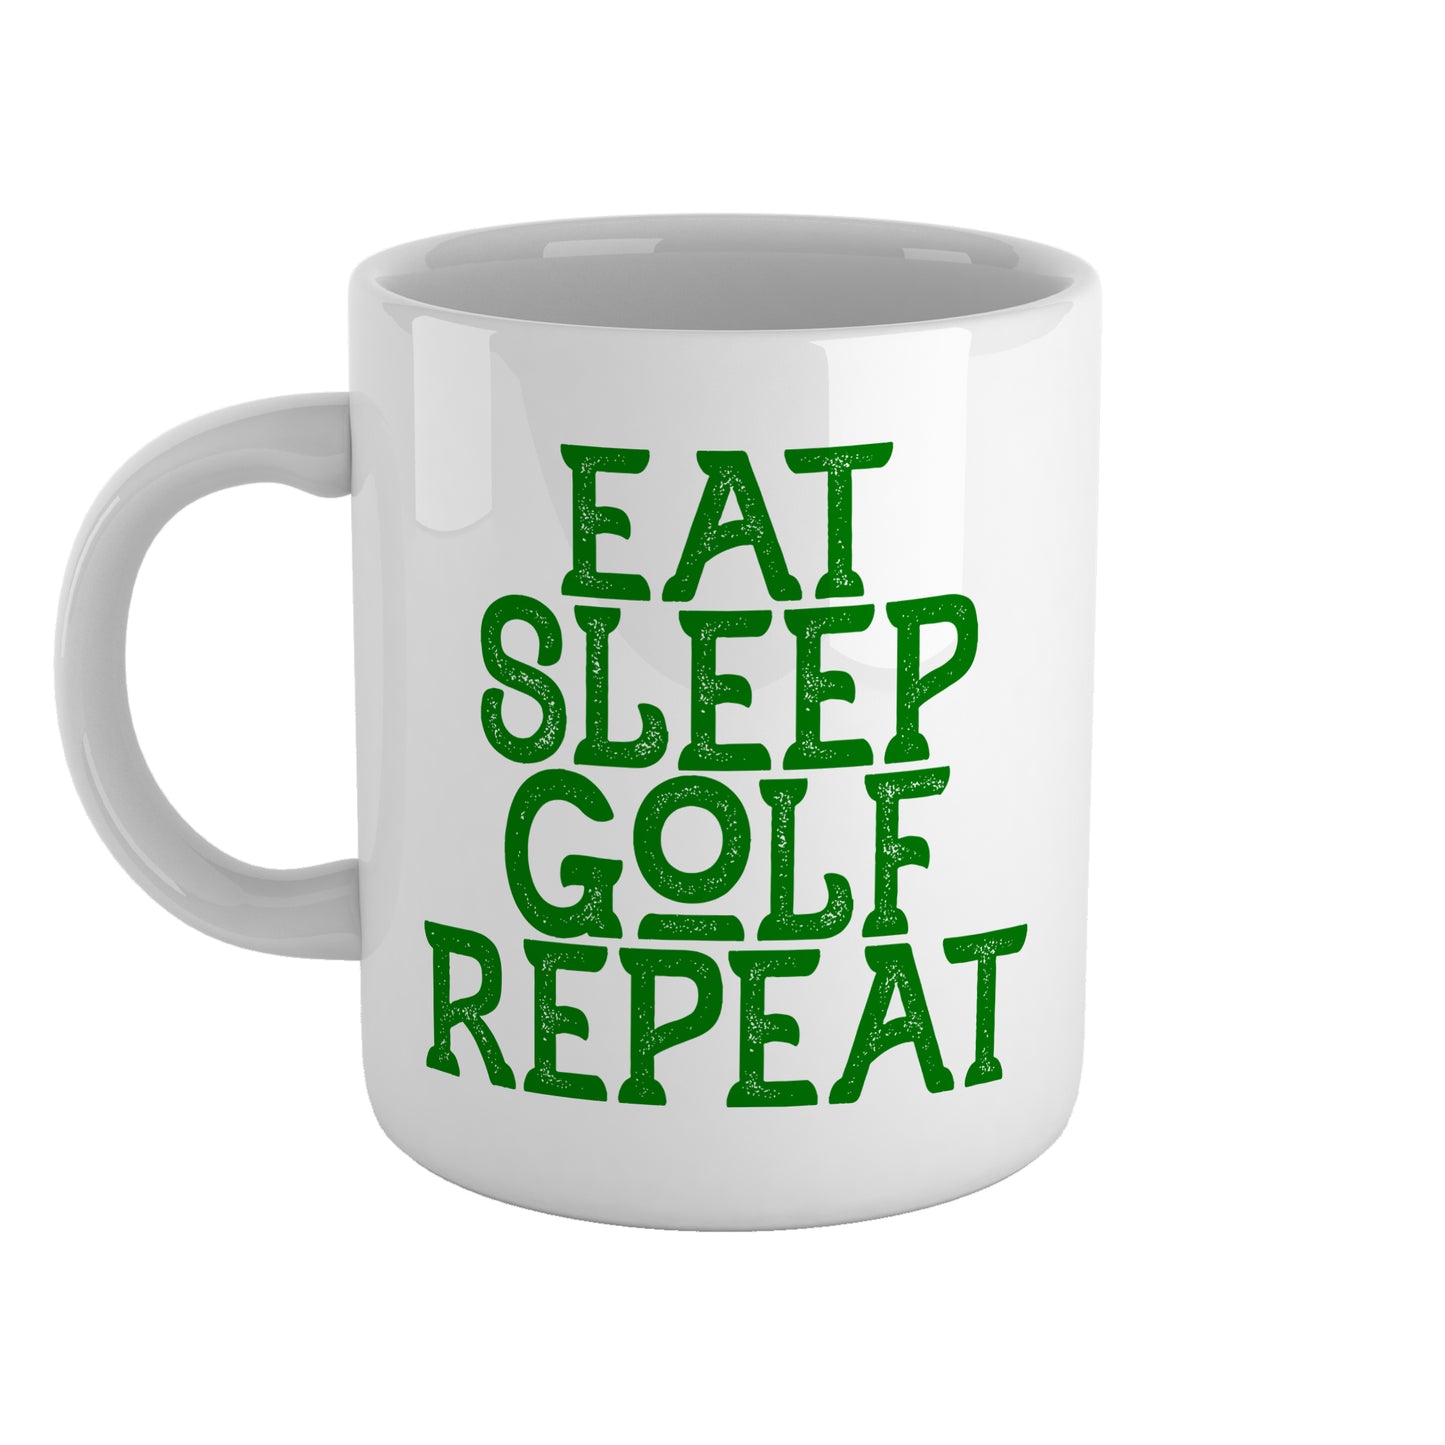 Eat sleep golf repeat | Ceramic mug